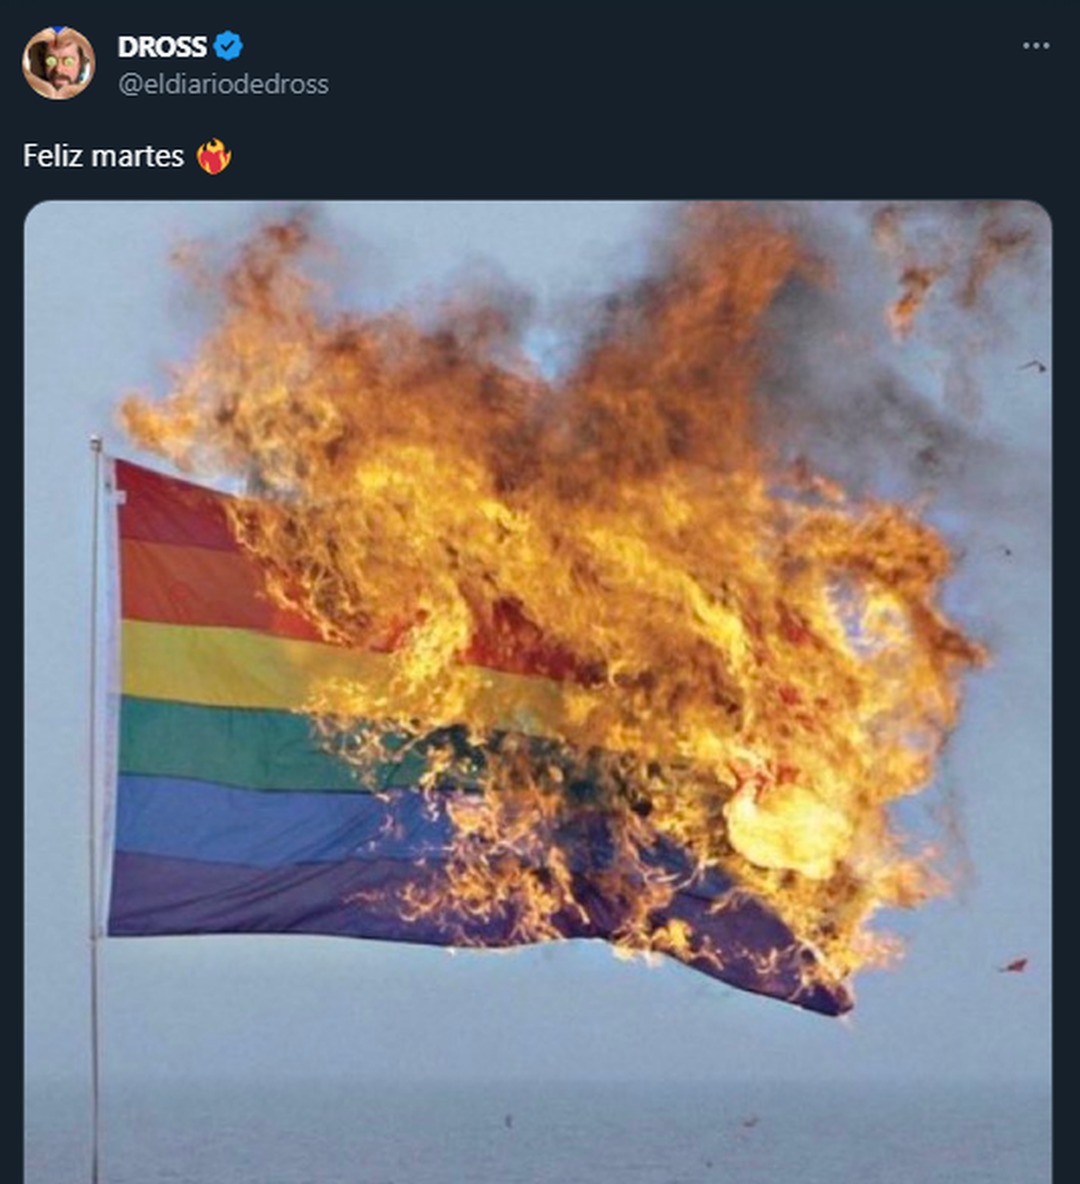 La bandera LGTV siendo quemada - meme